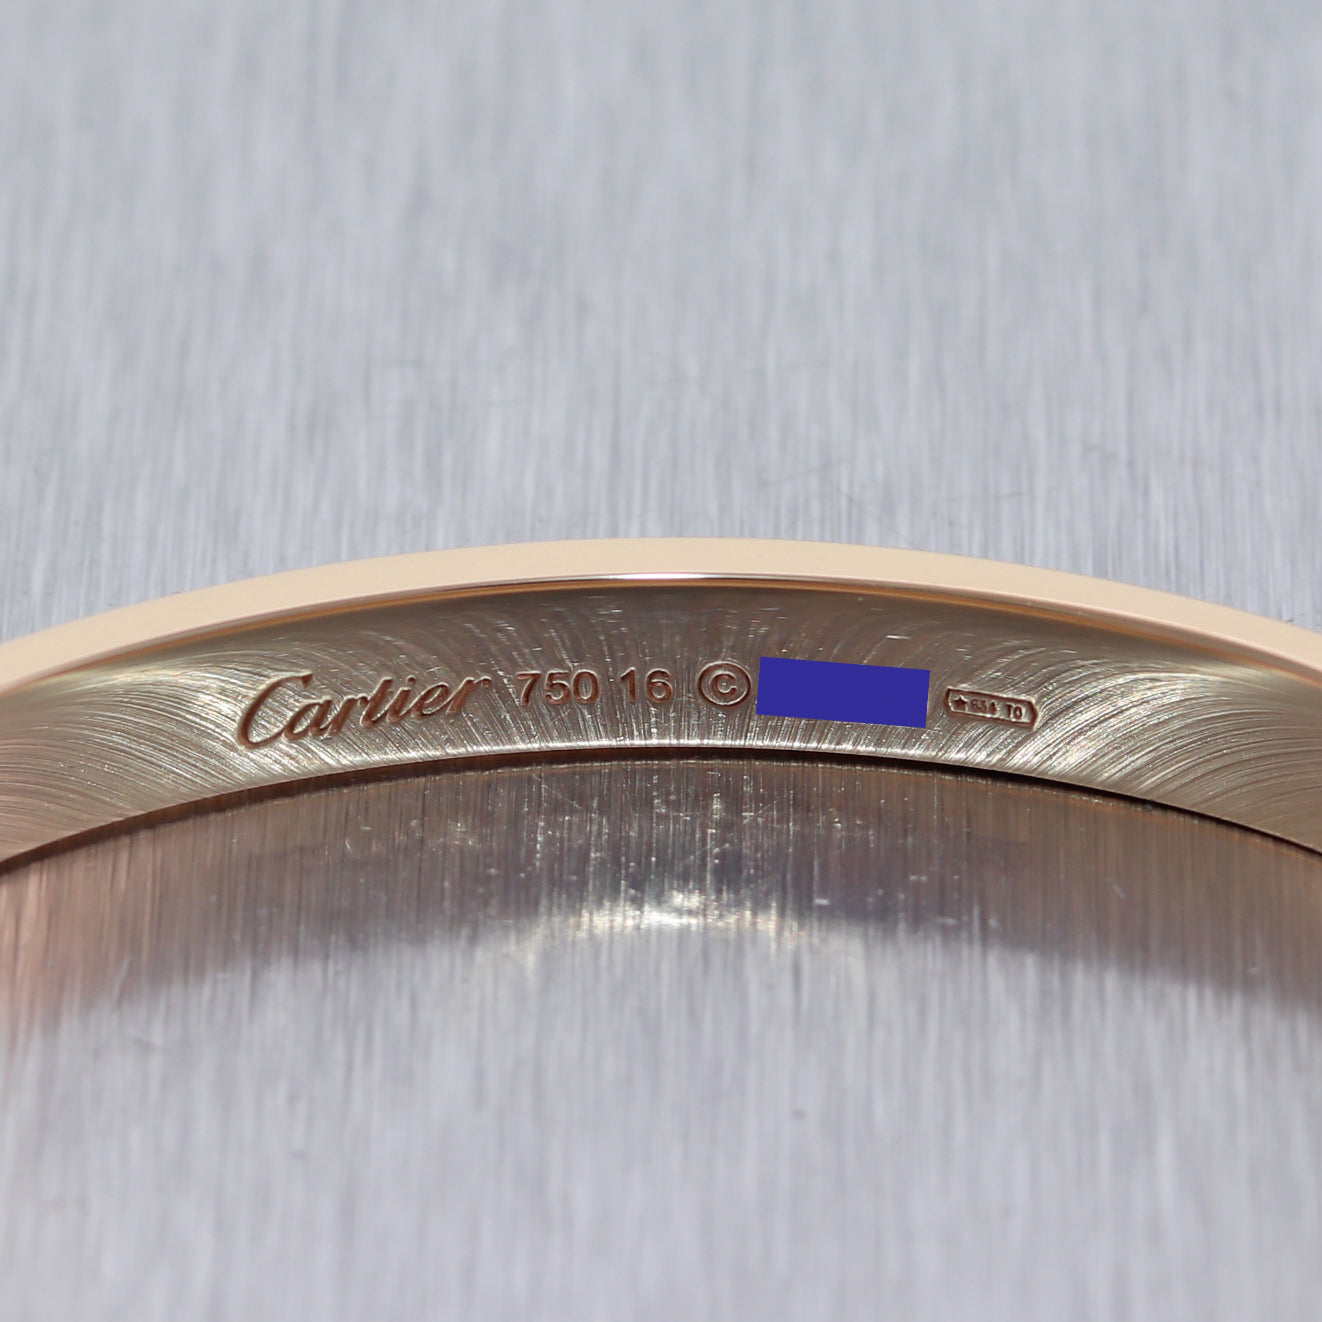 2019 Cartier 18k Rose Gold New Style Screw Love Bangle Bracelet Size 16 BP